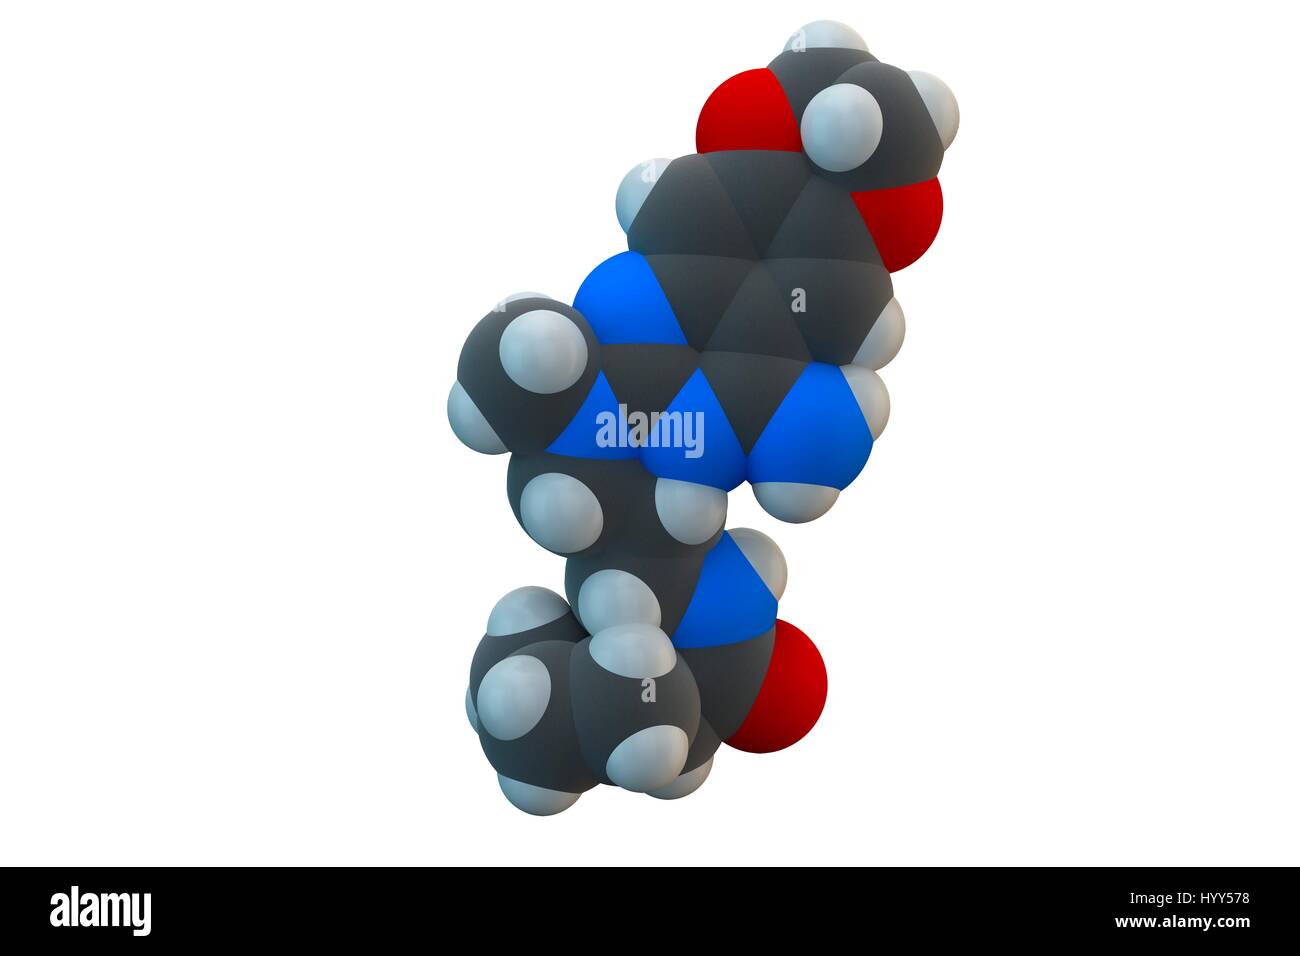 Alfuzosin benign prostate hyperplasia (BPH) drug molecule. Chemical formula is C19H27N5O4. Atoms are represented as spheres: carbon (grey), hydrogen (white), nitrogen (blue), oxygen (red). Illustration. Stock Photo